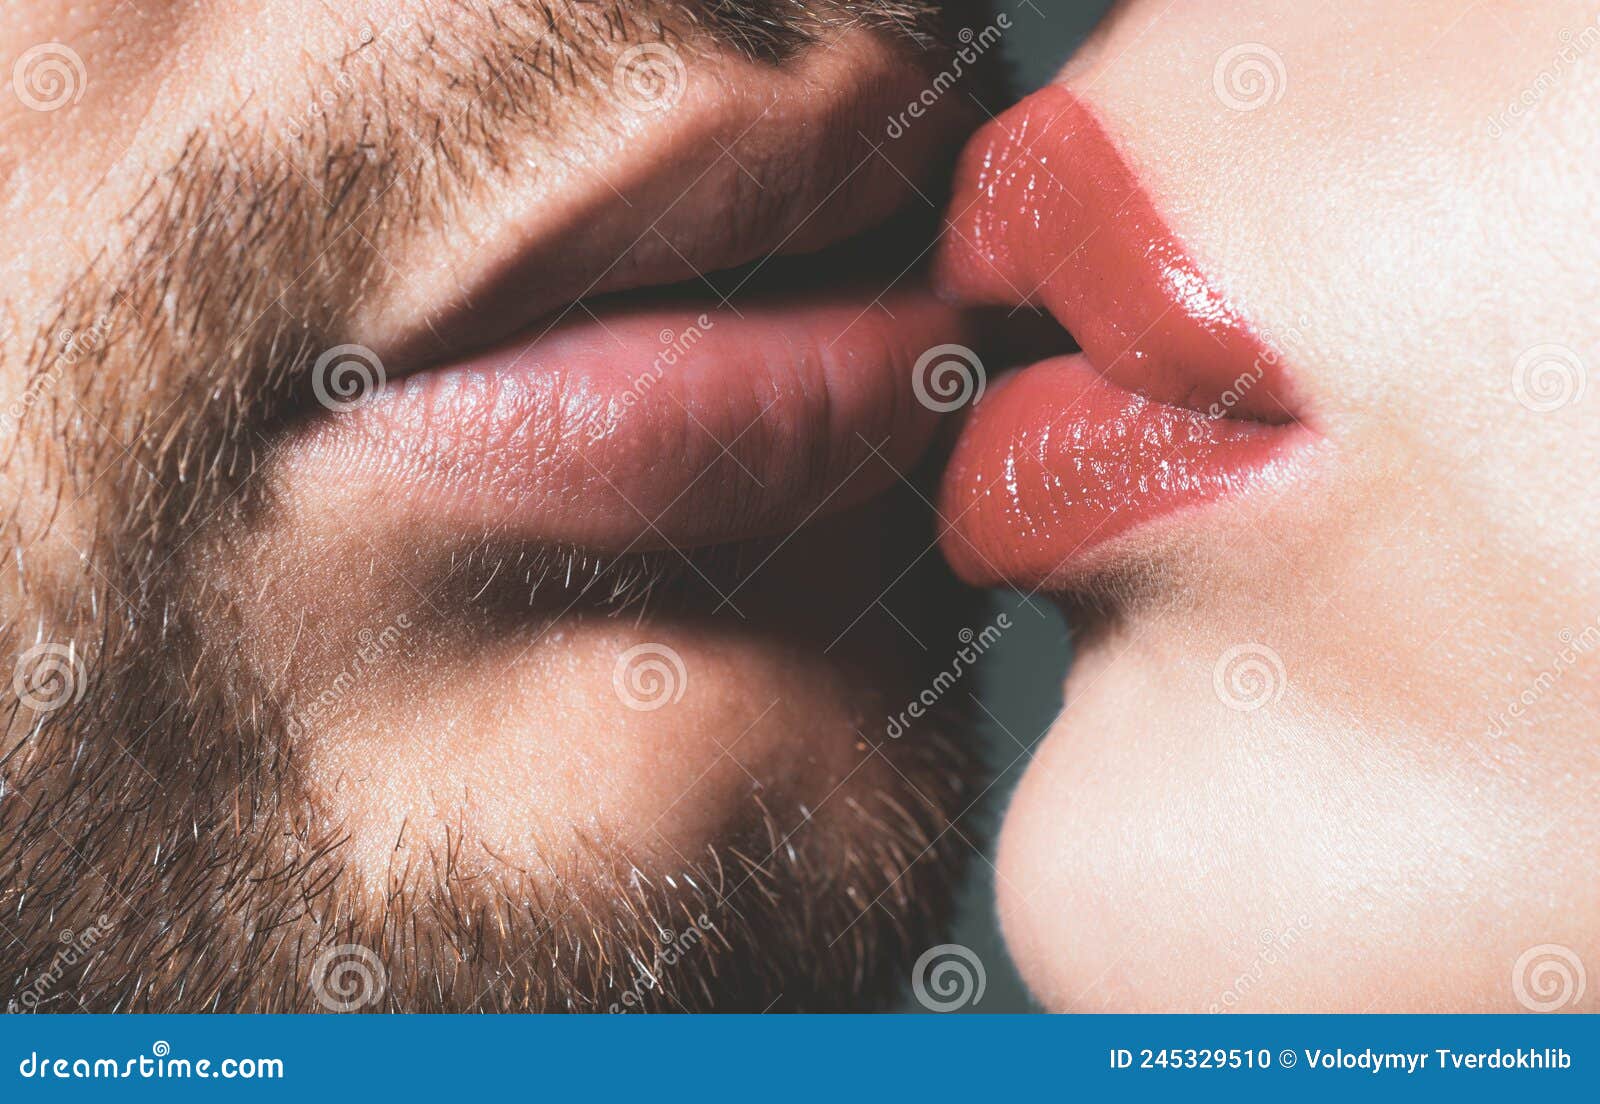 Couple Kiss Lips. Satisfied and Enjoying Romantic Moment